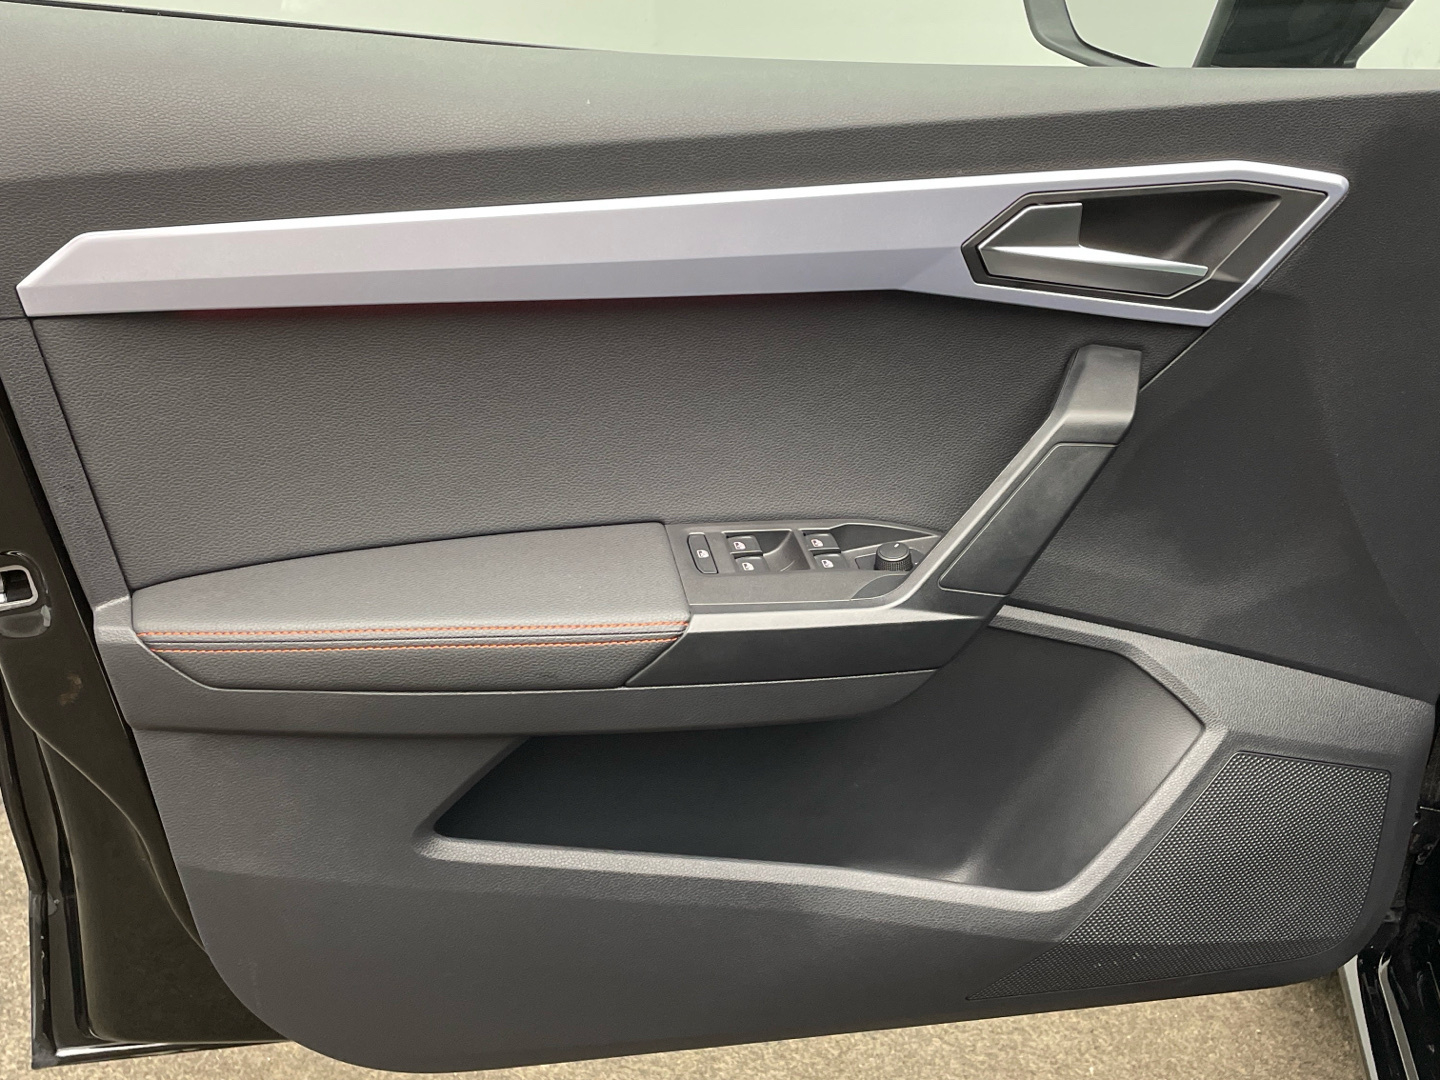 Seat Ibiza FR 1.5 TSI DSG Navi CarPlay LED Panorama 